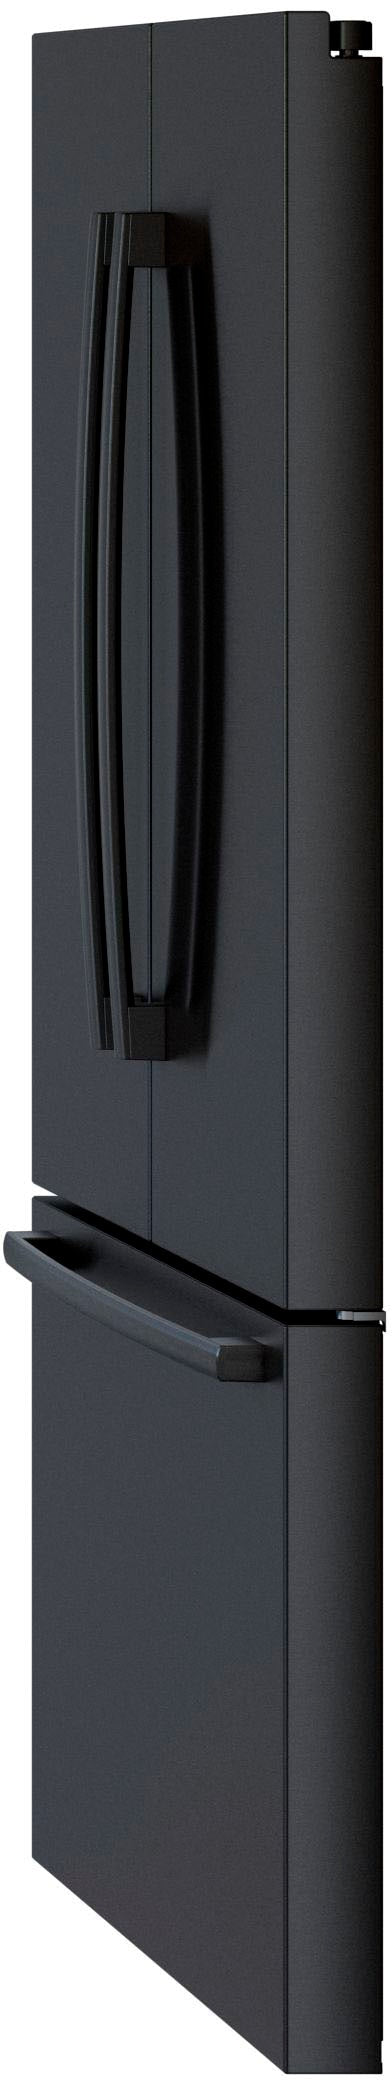 Bosch - 800 Series 21 Cu. Ft. French Door Counter-Depth Smart Refrigerator - Black stainless steel_8